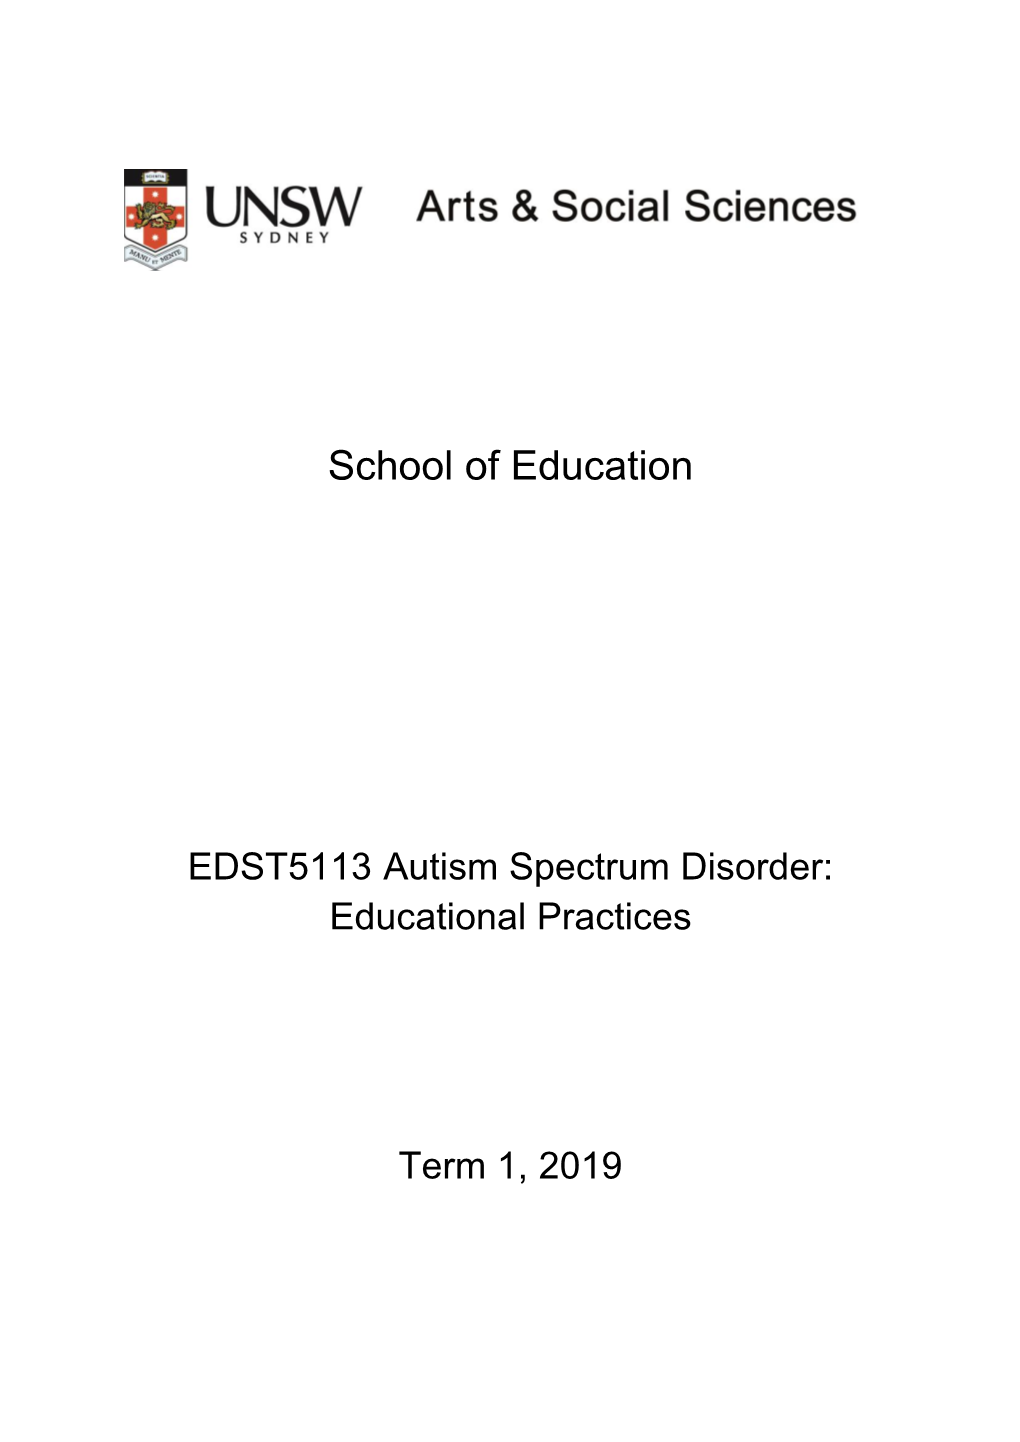 EDST5113 Autism Spectrum Disorder: Educational Practices